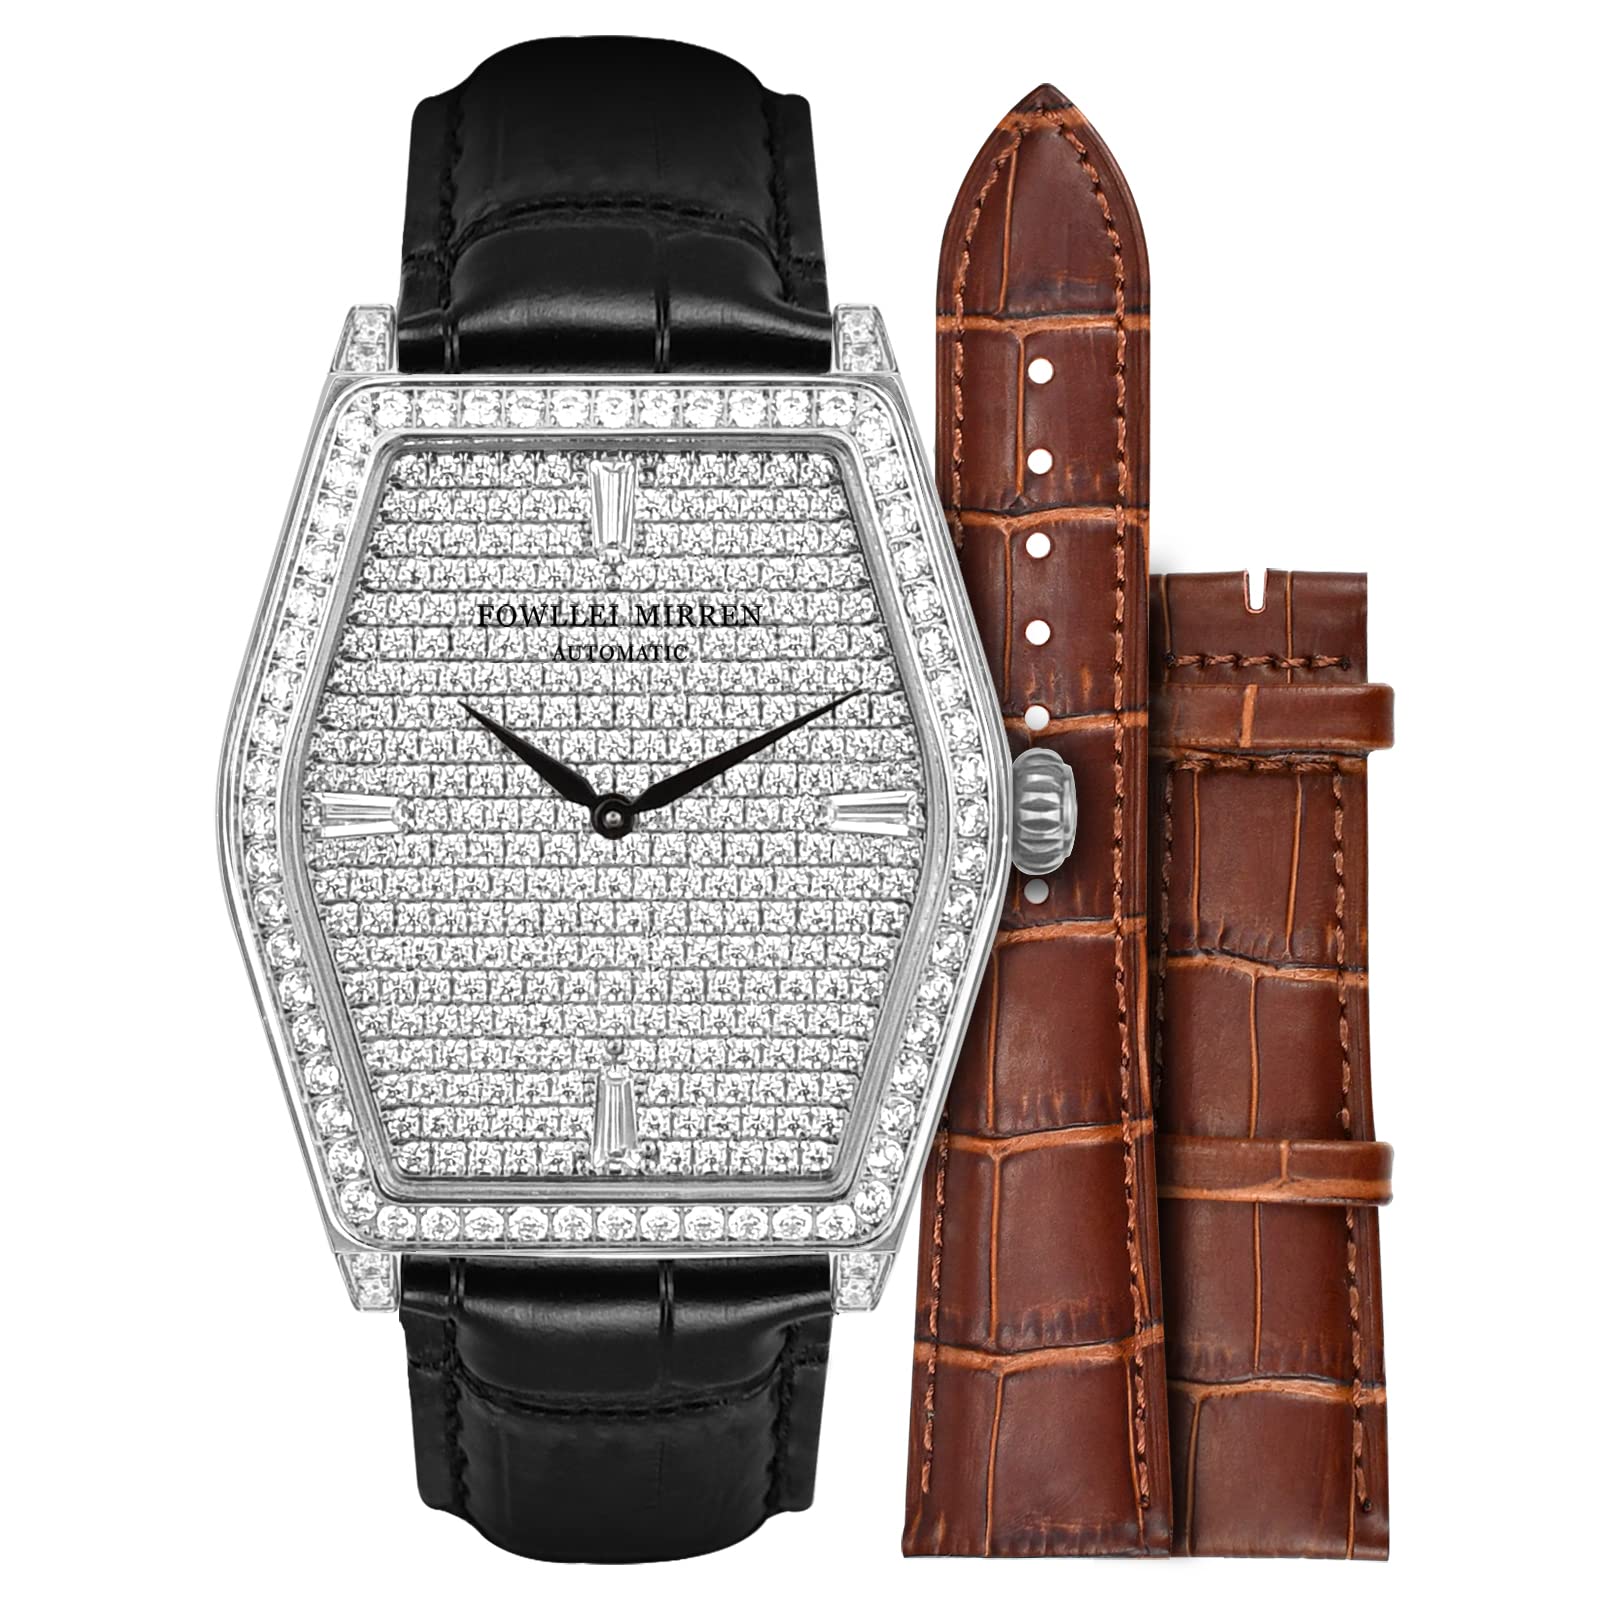 Fowllei mirren Diamond Wrist Watch for Women Diamond Wrist Watch for Men Unisex Analog Hexagon Watch Luxury Fashion Gift Wat